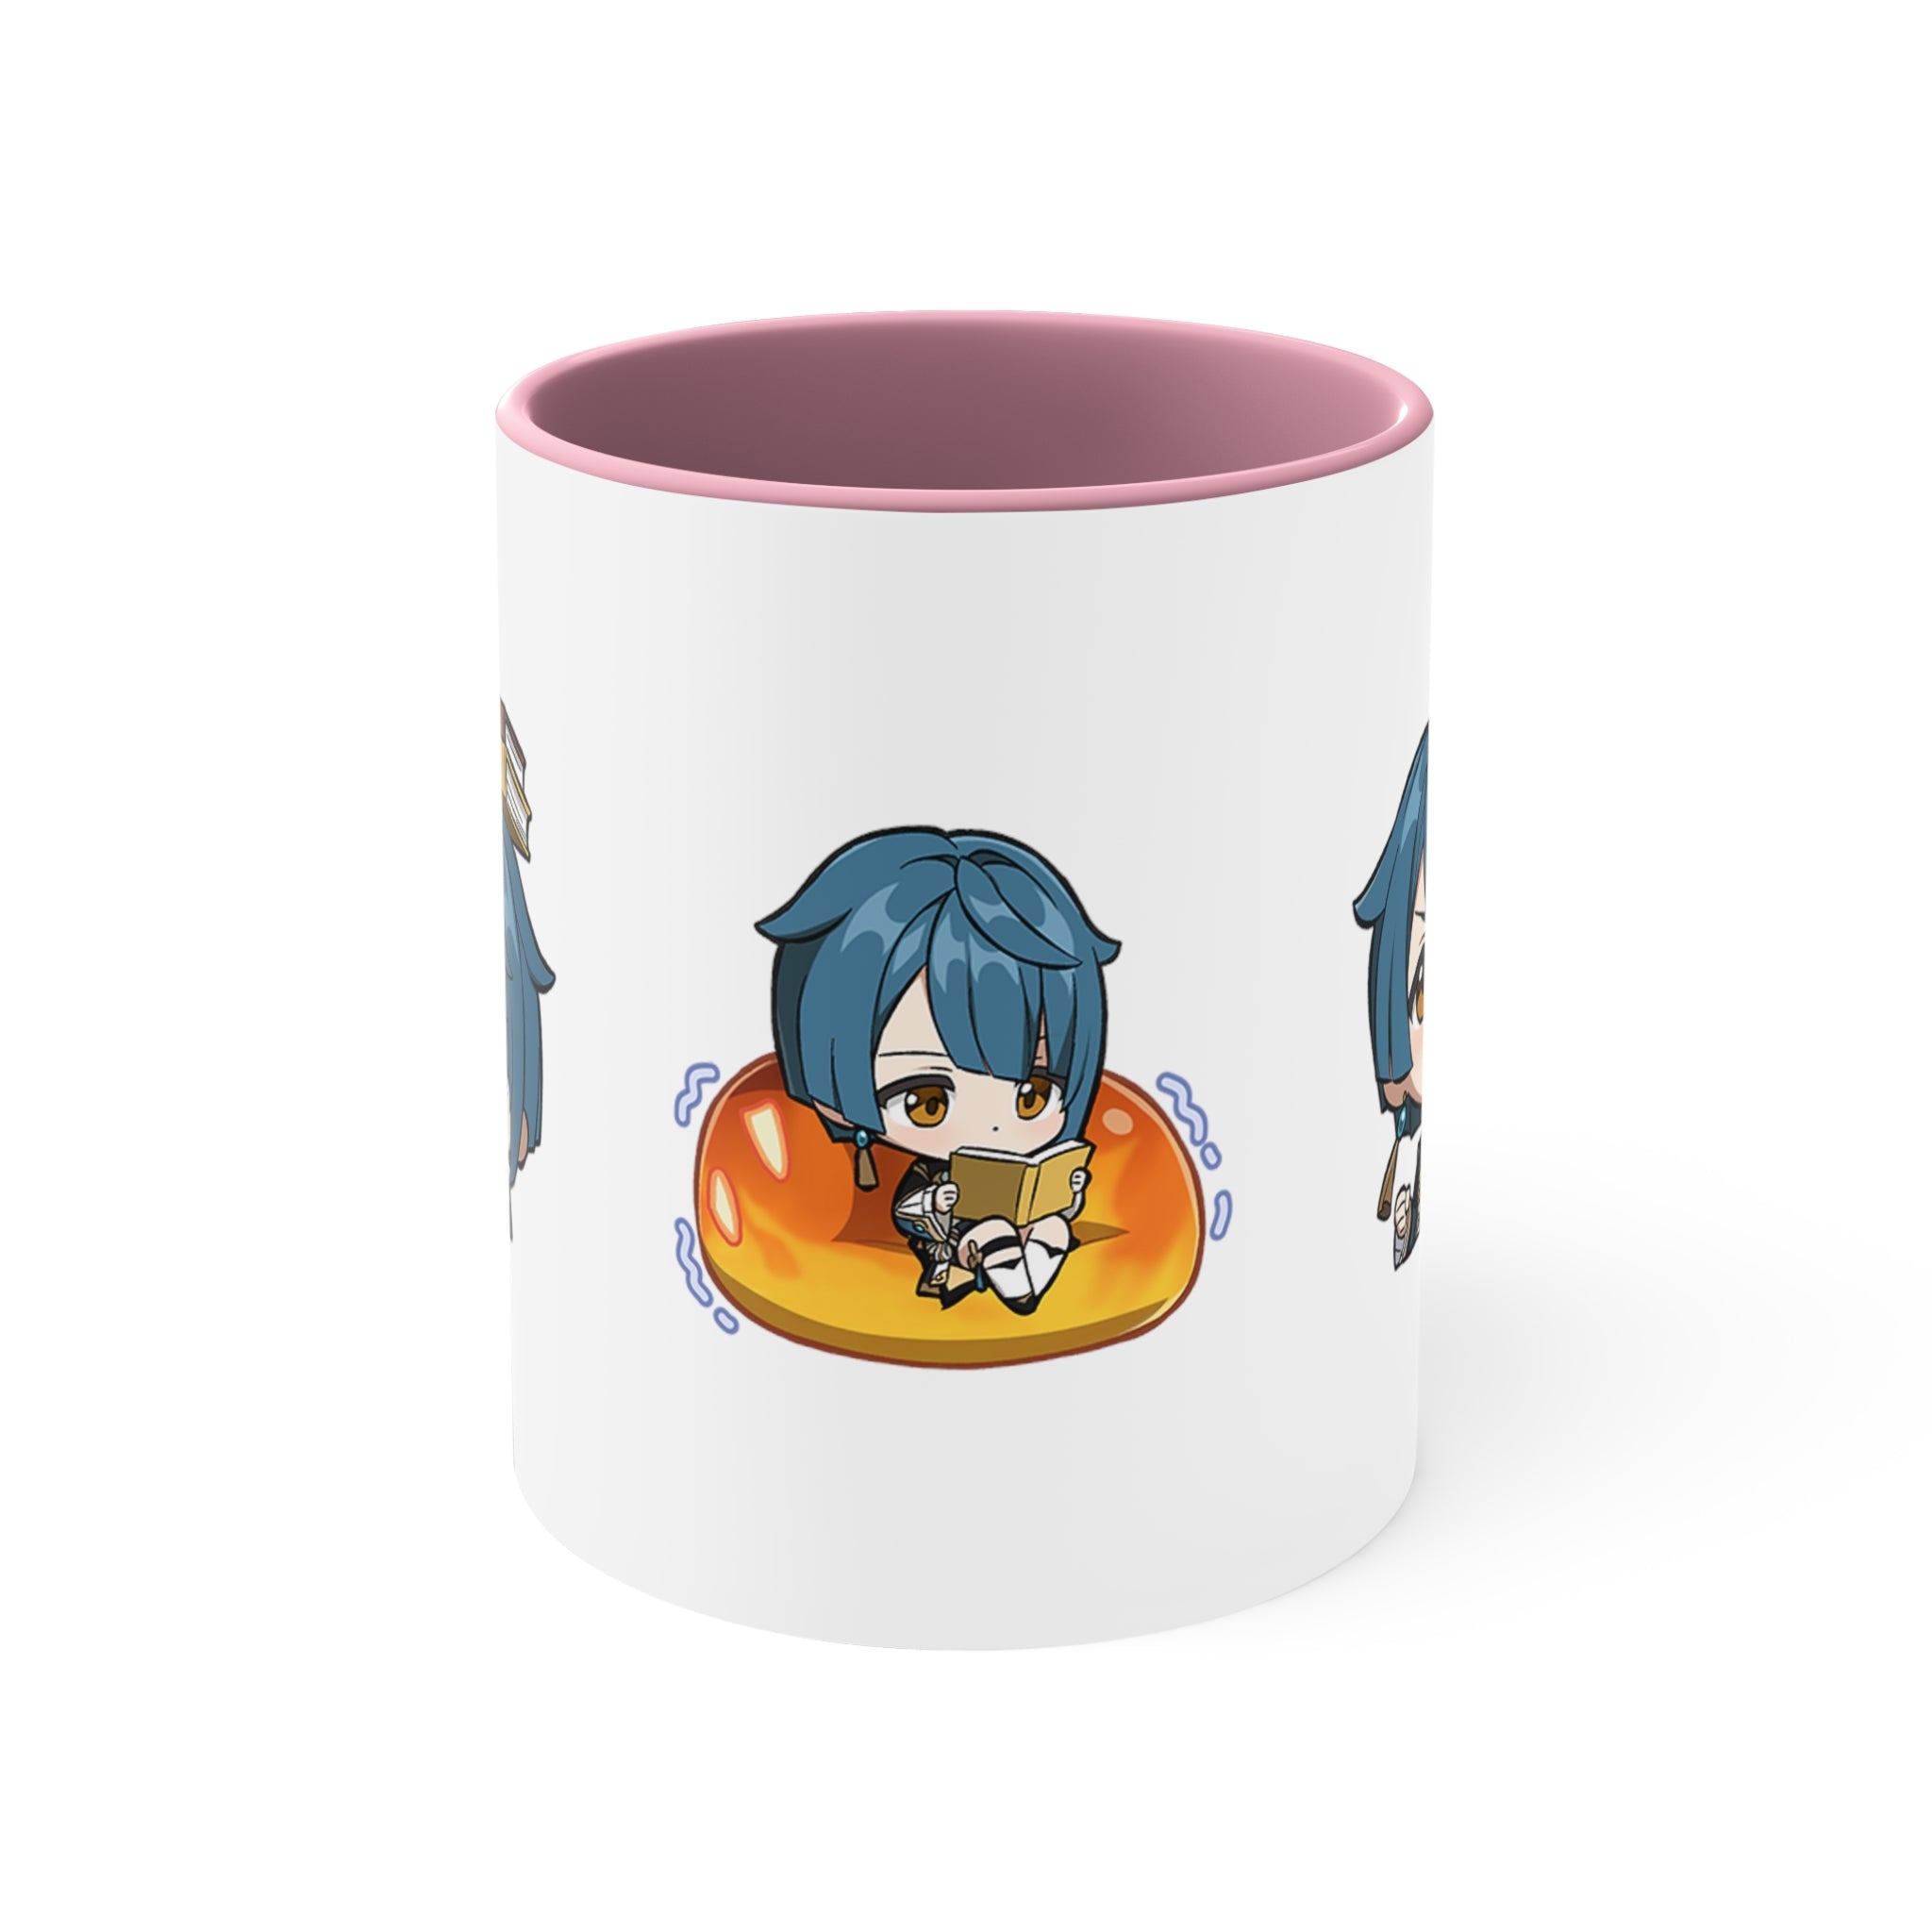 Xingqiu Genshin Impact Accent Coffee Mug, 11oz Cups Mugs Cup Gift For Gamer Gifts Game Anime Fanart Fan Birthday Valentine's Christmas